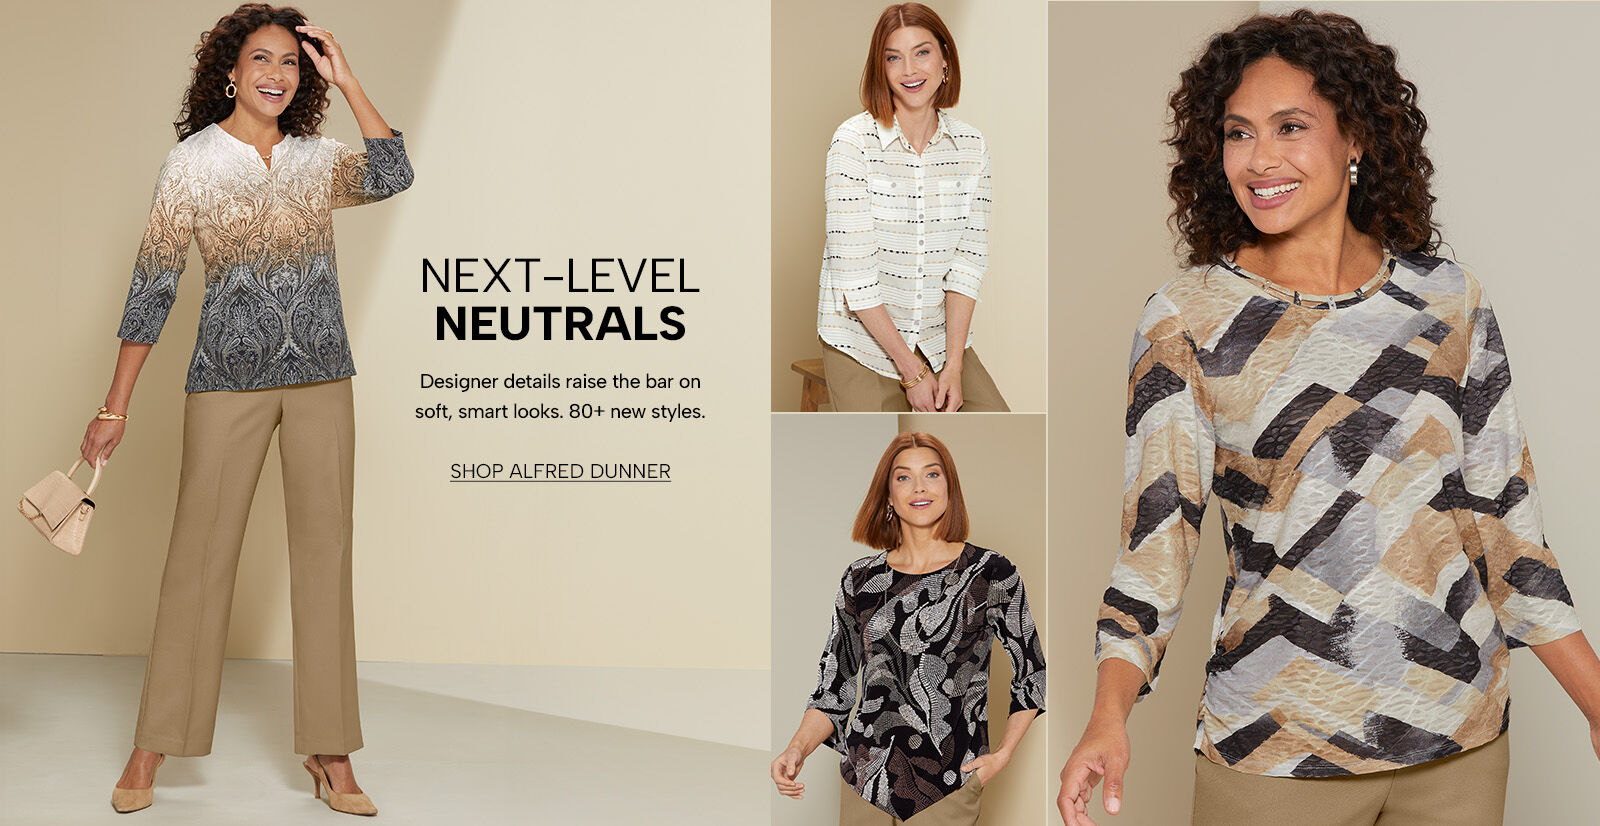 Next-level Neutrals. Designer details raise the bar on soft, smart looks. 80+ new styles. Shop Alfred Dunner